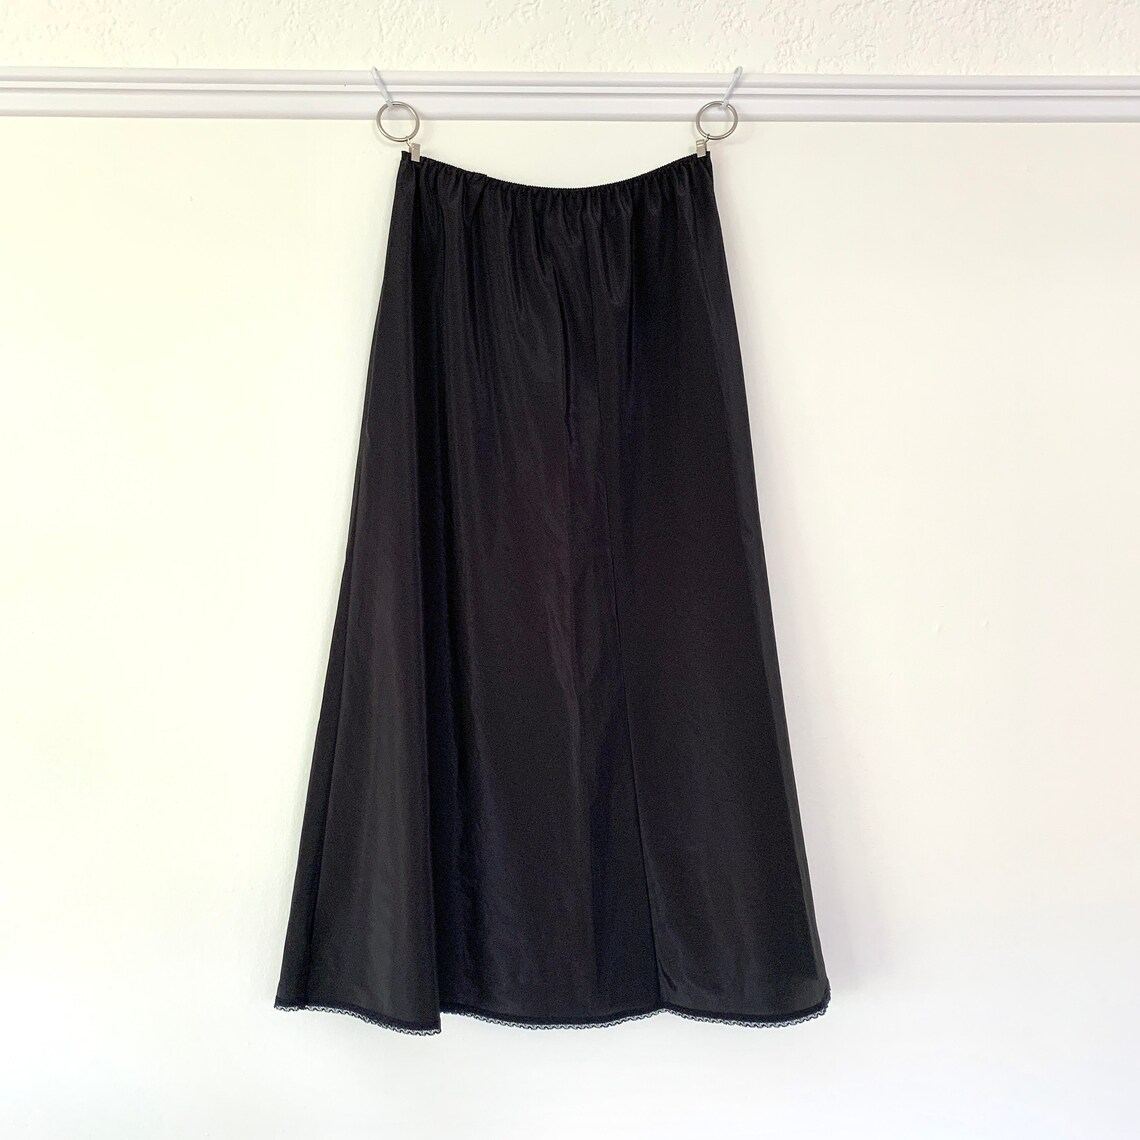 Farr West black satin half skirt slip w/ lace trim | Etsy